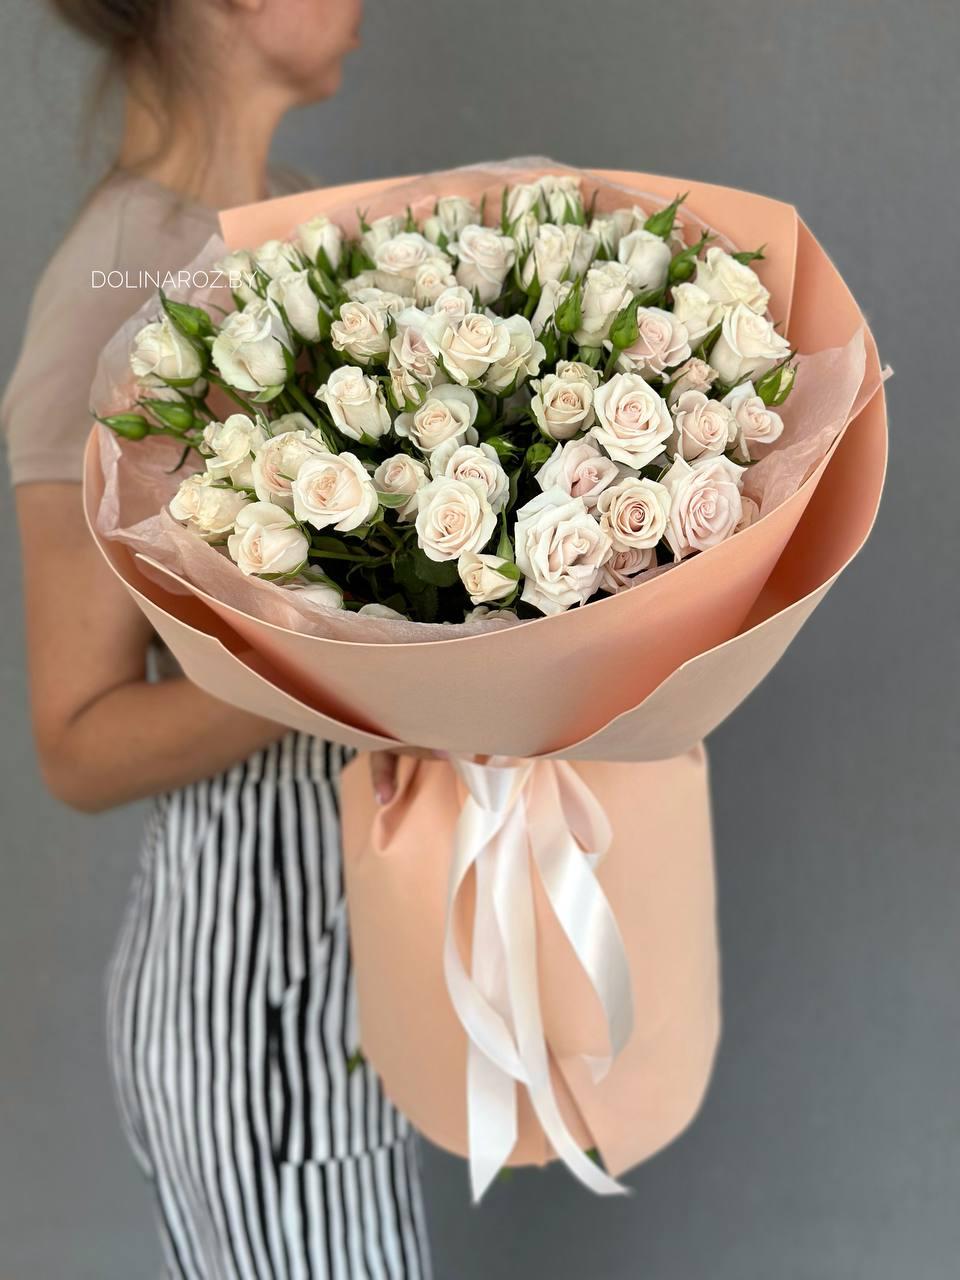 Bouquet of flowers "Argentine"